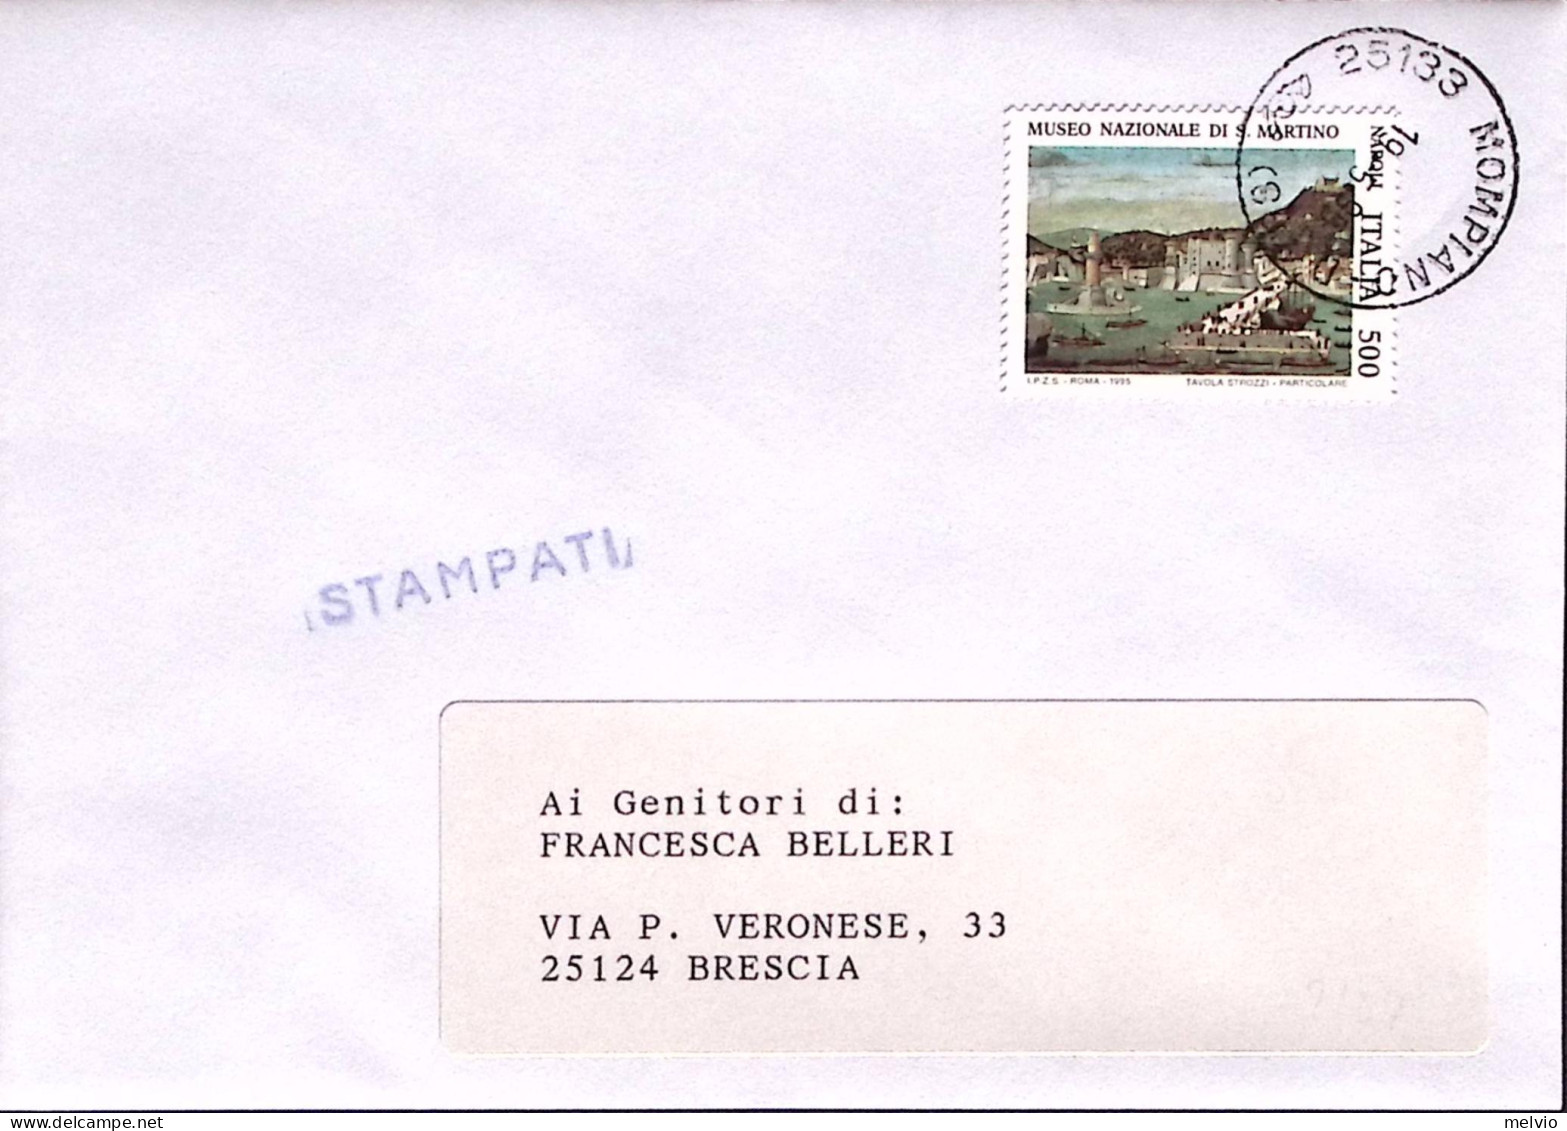 1995-TESORI MUSEI Museo S. Martino Lire 500 Su Stampe - 1991-00: Poststempel